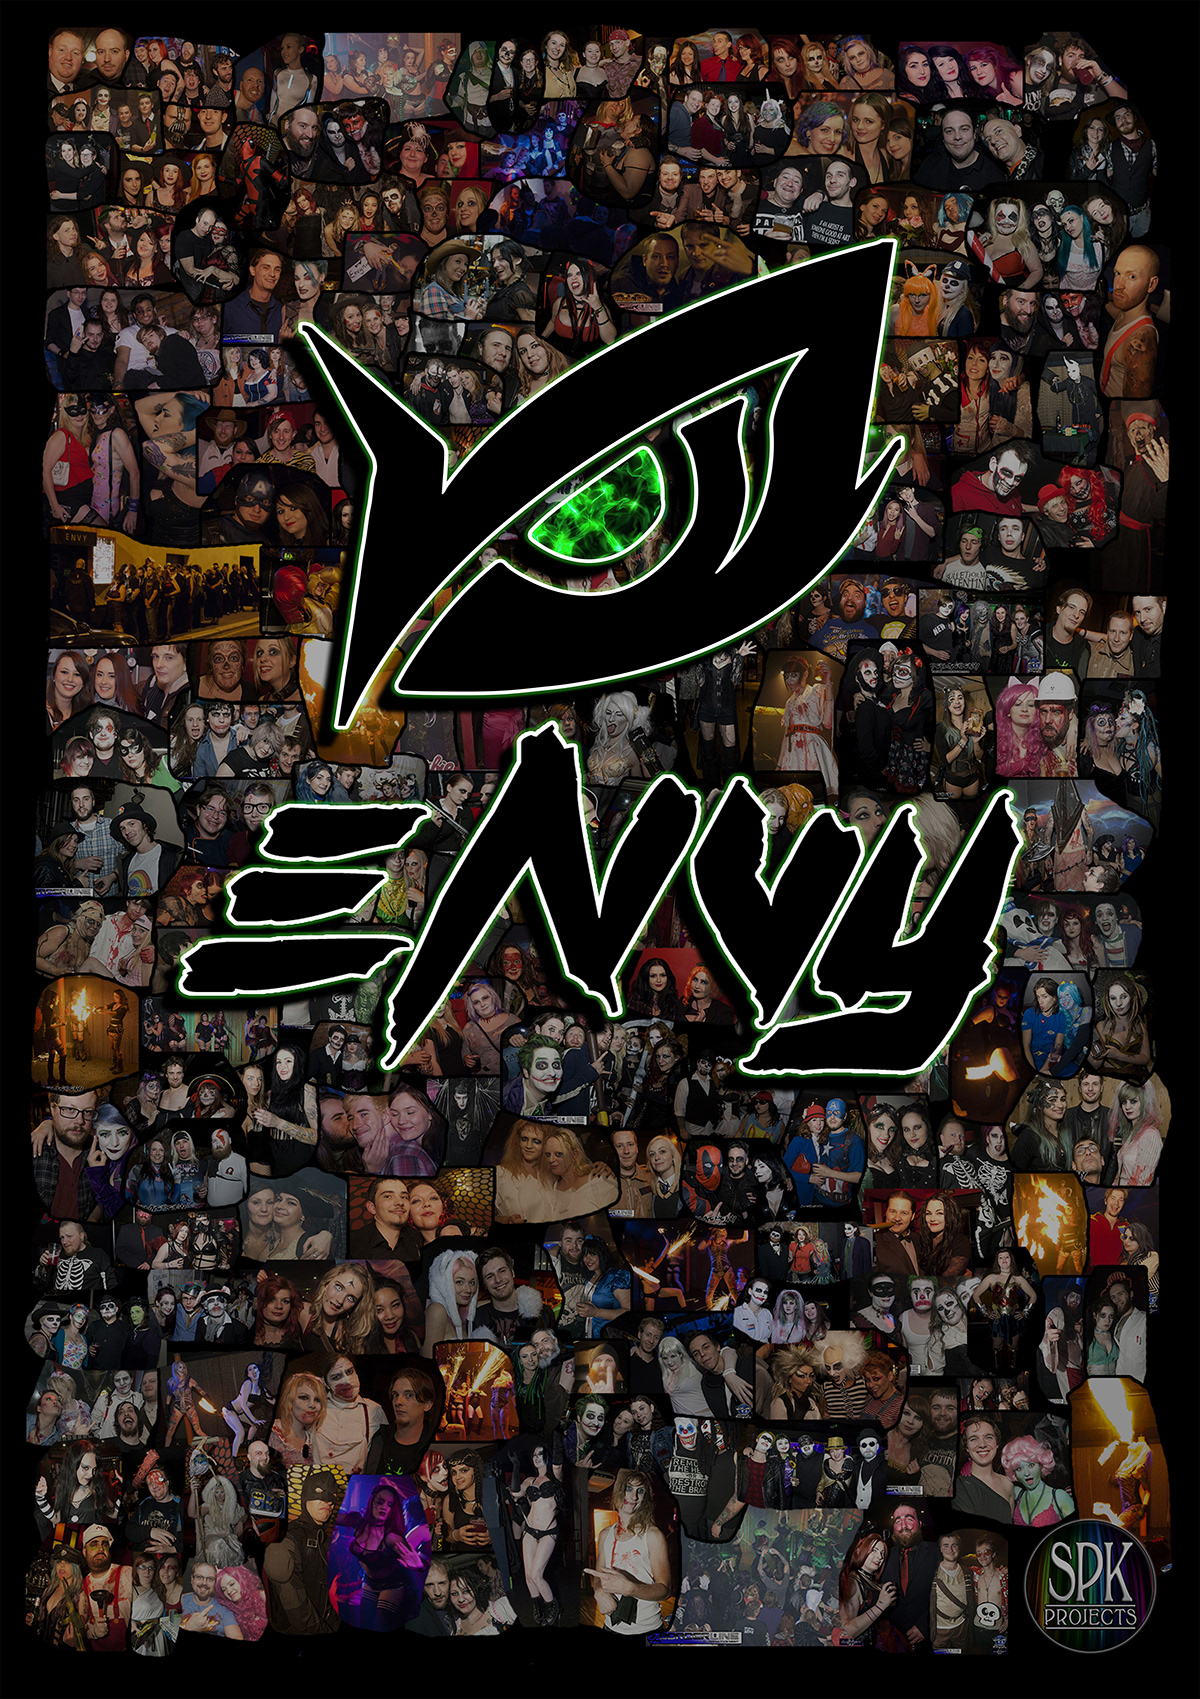 Promotion Club Envy Nightshift team awesome